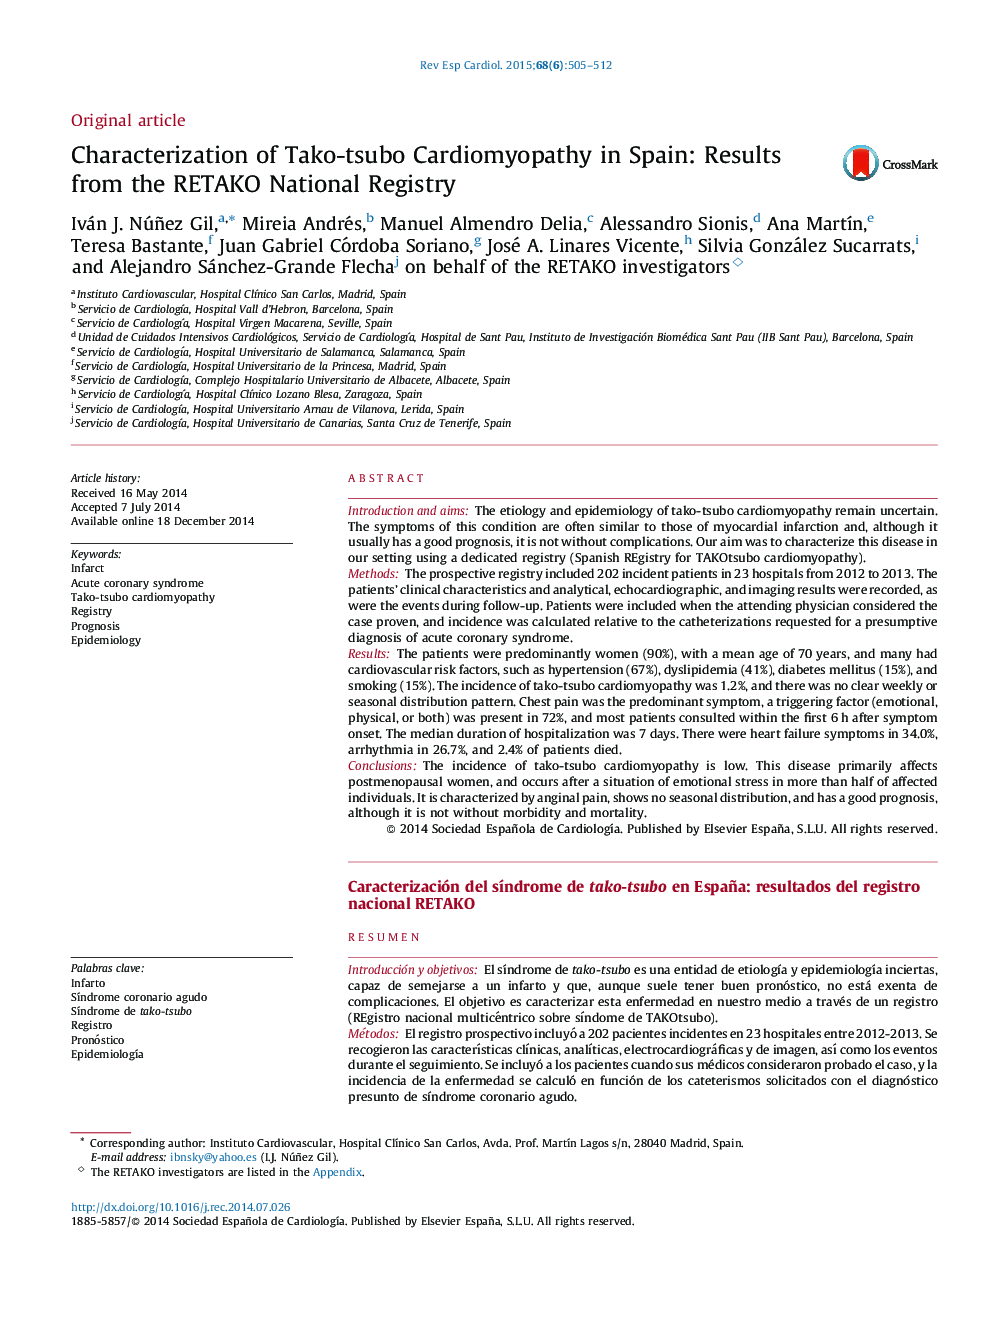 Characterization of Tako-tsubo Cardiomyopathy in Spain: Results from the RETAKO National Registry